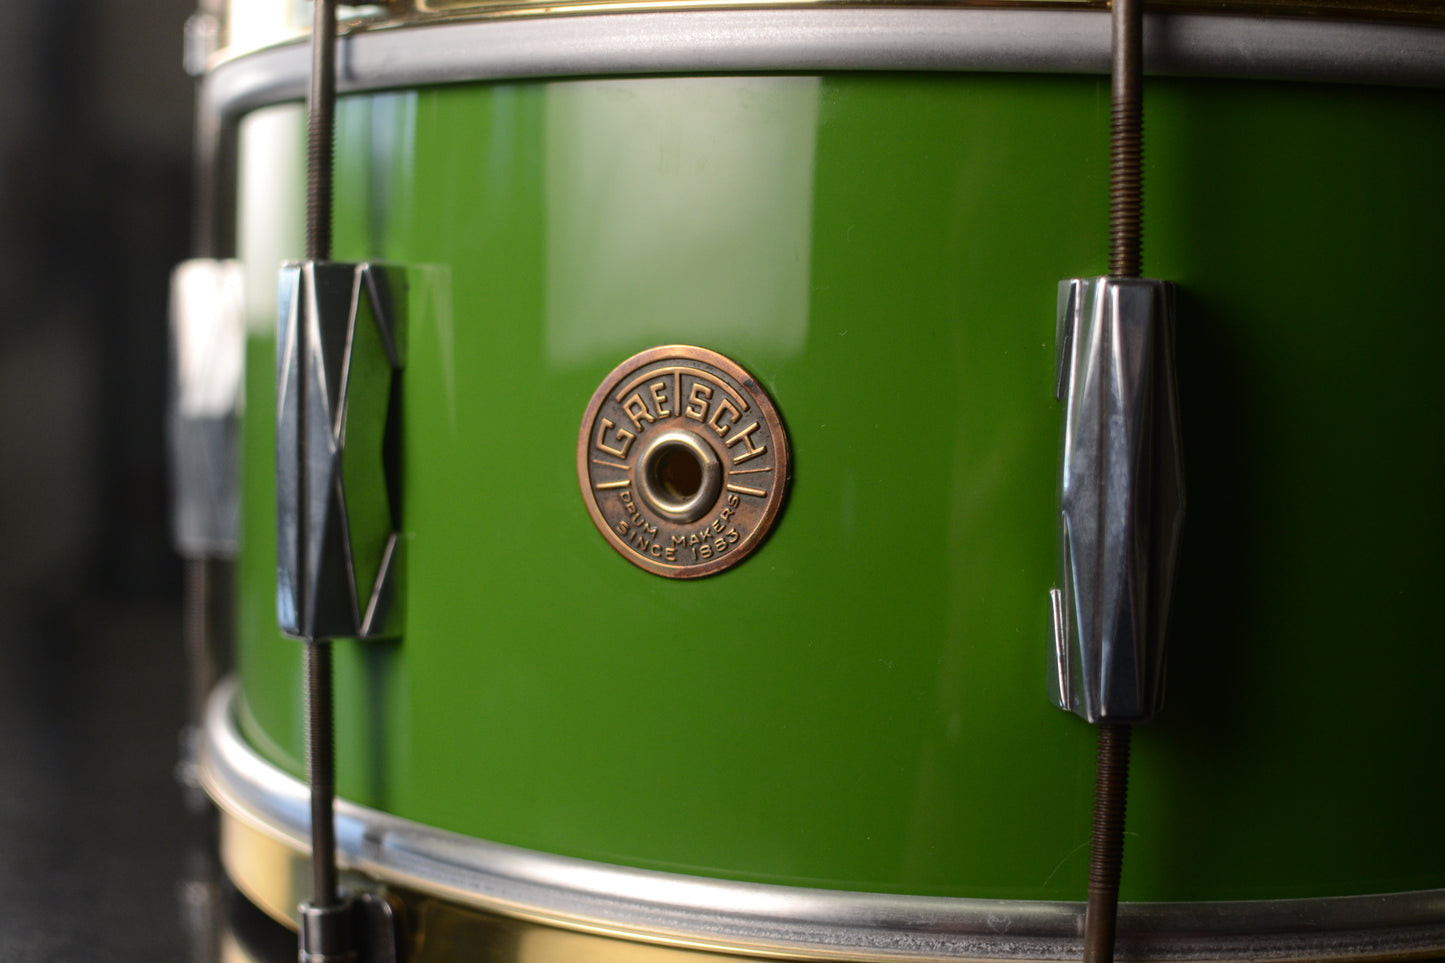 Gretsch 'Renown' 6.5" x 14" Vintage Snare Drum with 'Rocket' Lugs - 1950